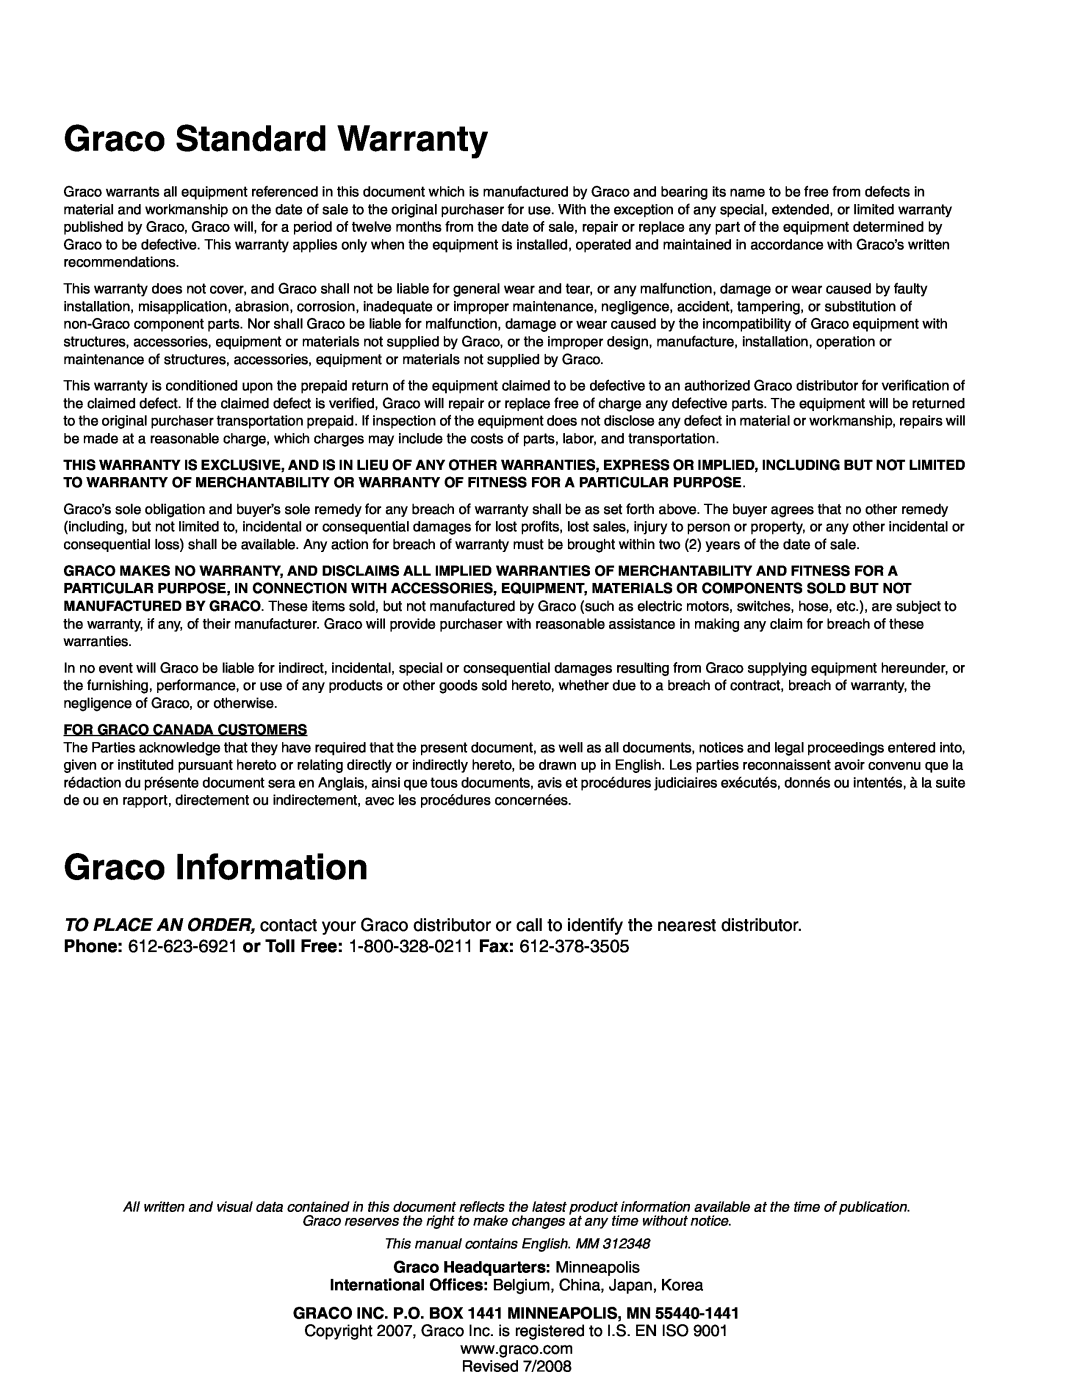 Graco 312348B Graco Standard Warranty, Graco Information, Graco Headquarters Minneapolis, Revised 7/2008 